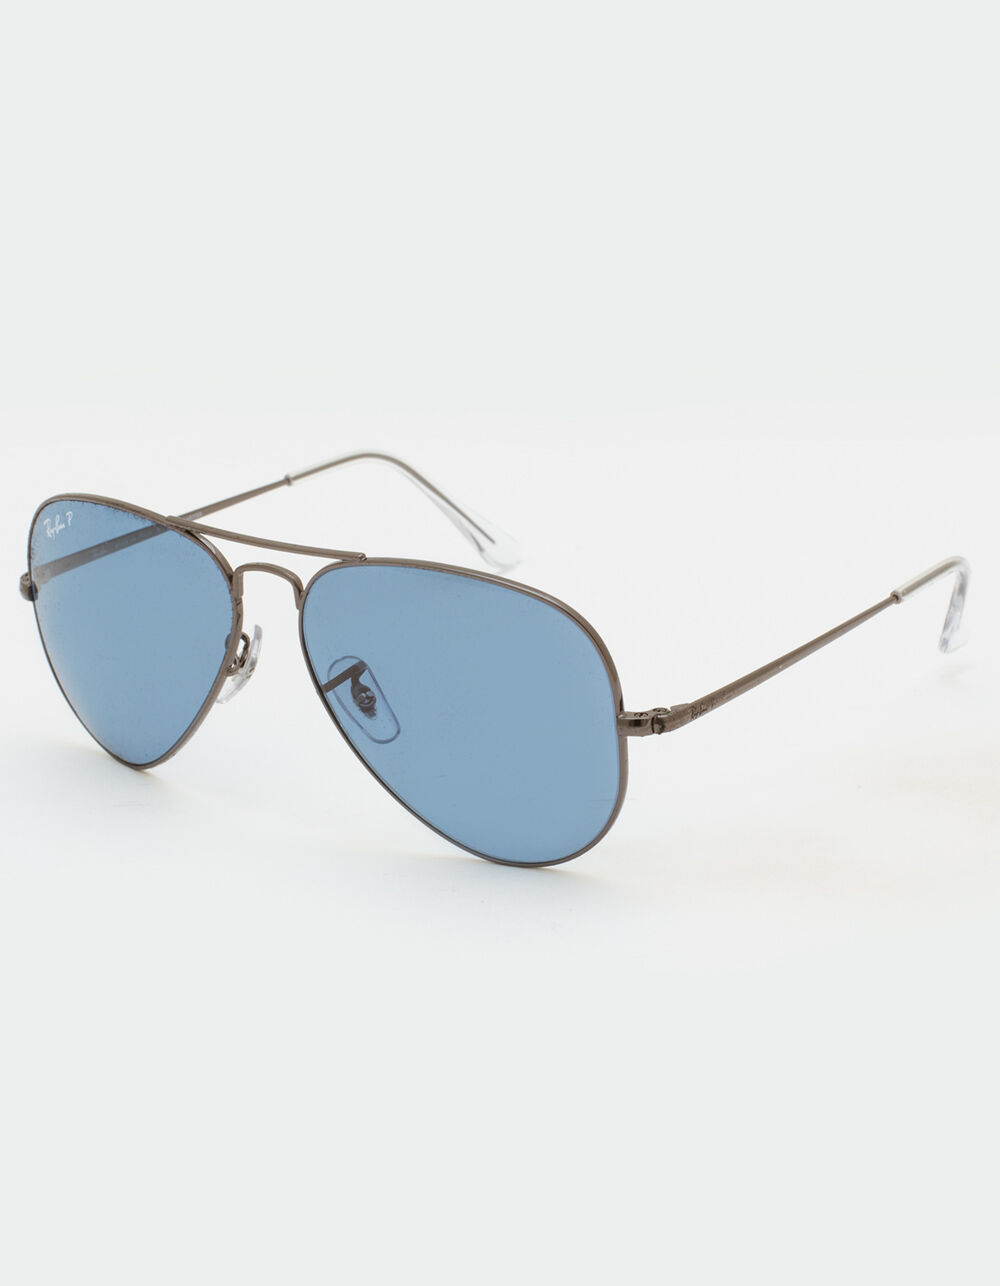 Ray-Ban Aviator Sunglasses: Polarized & Classic | Tillys